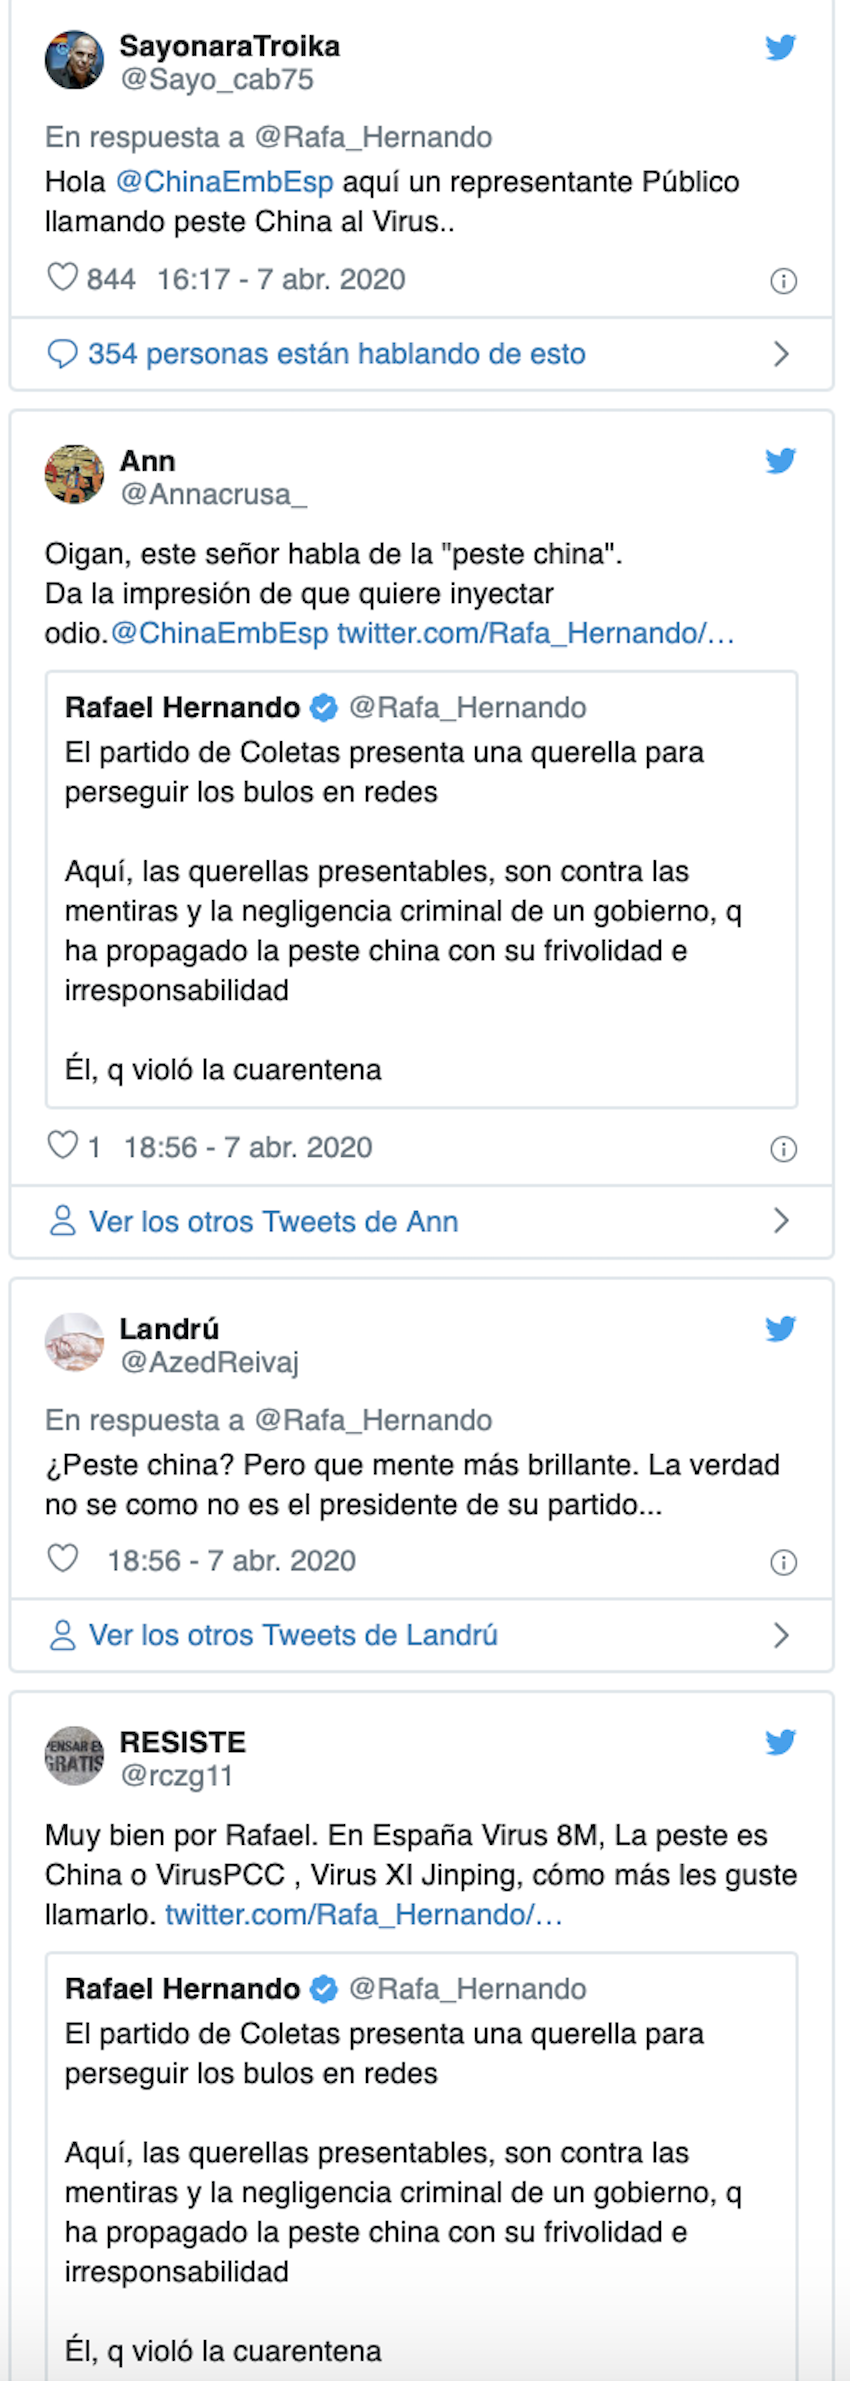 Captura de tuits contra Rafael Hernando